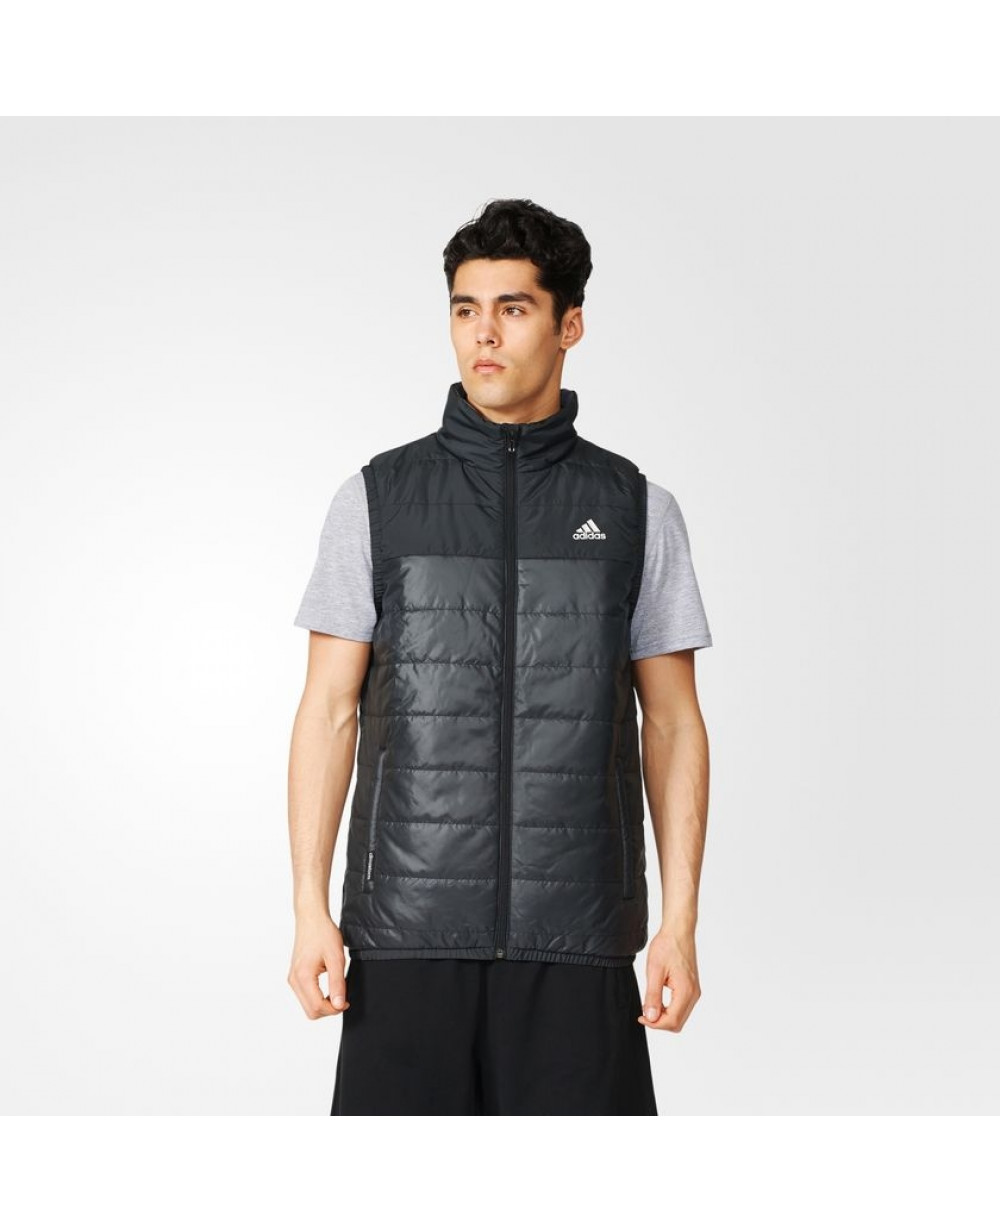 adidas half jacket price in india